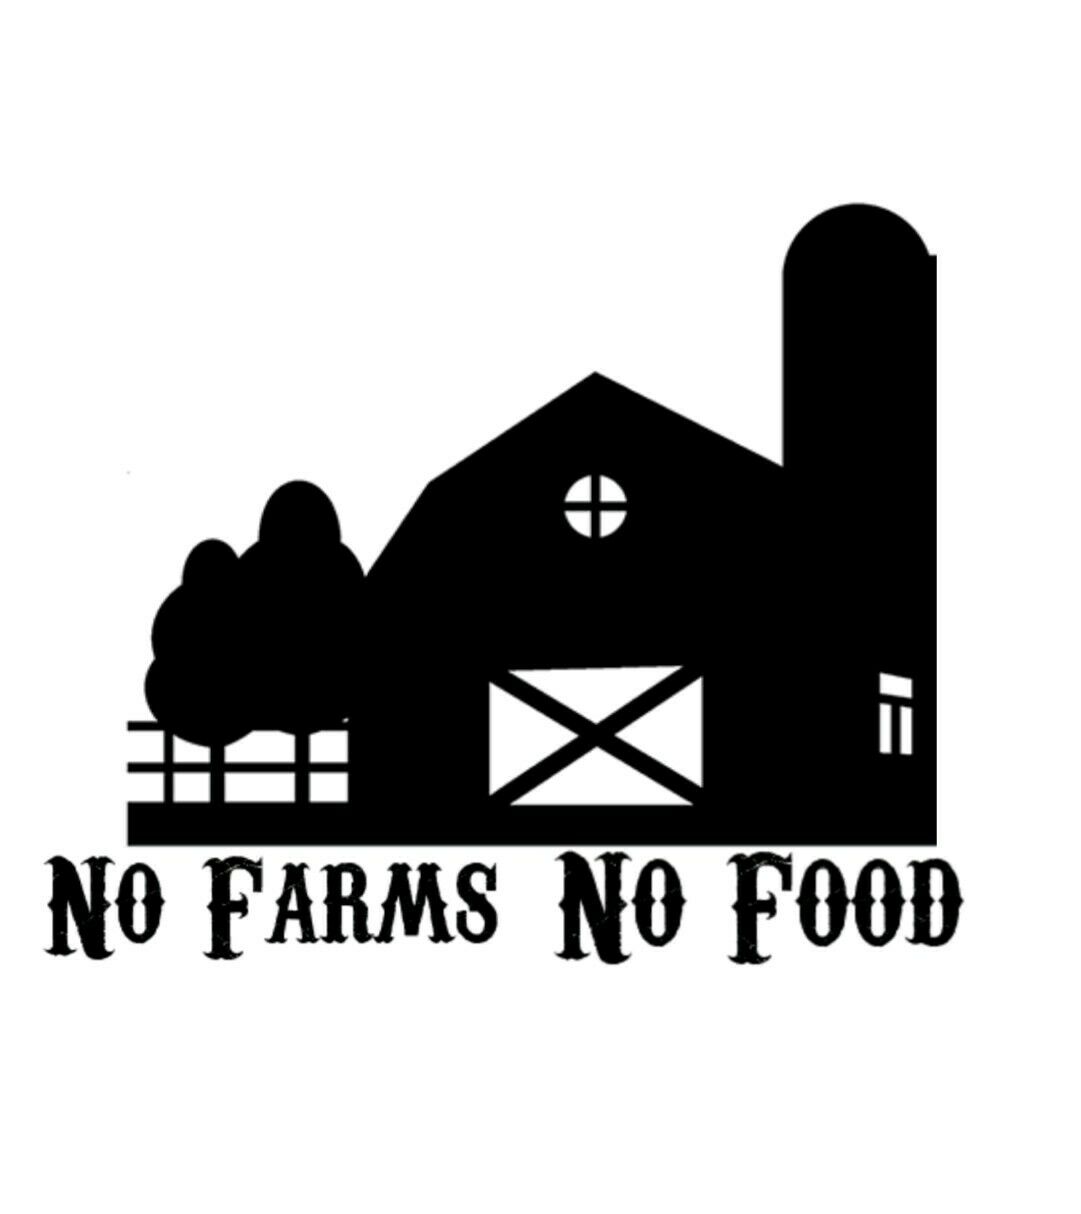 No Farms no food farmers environment Car window decal truck outdoor sticker